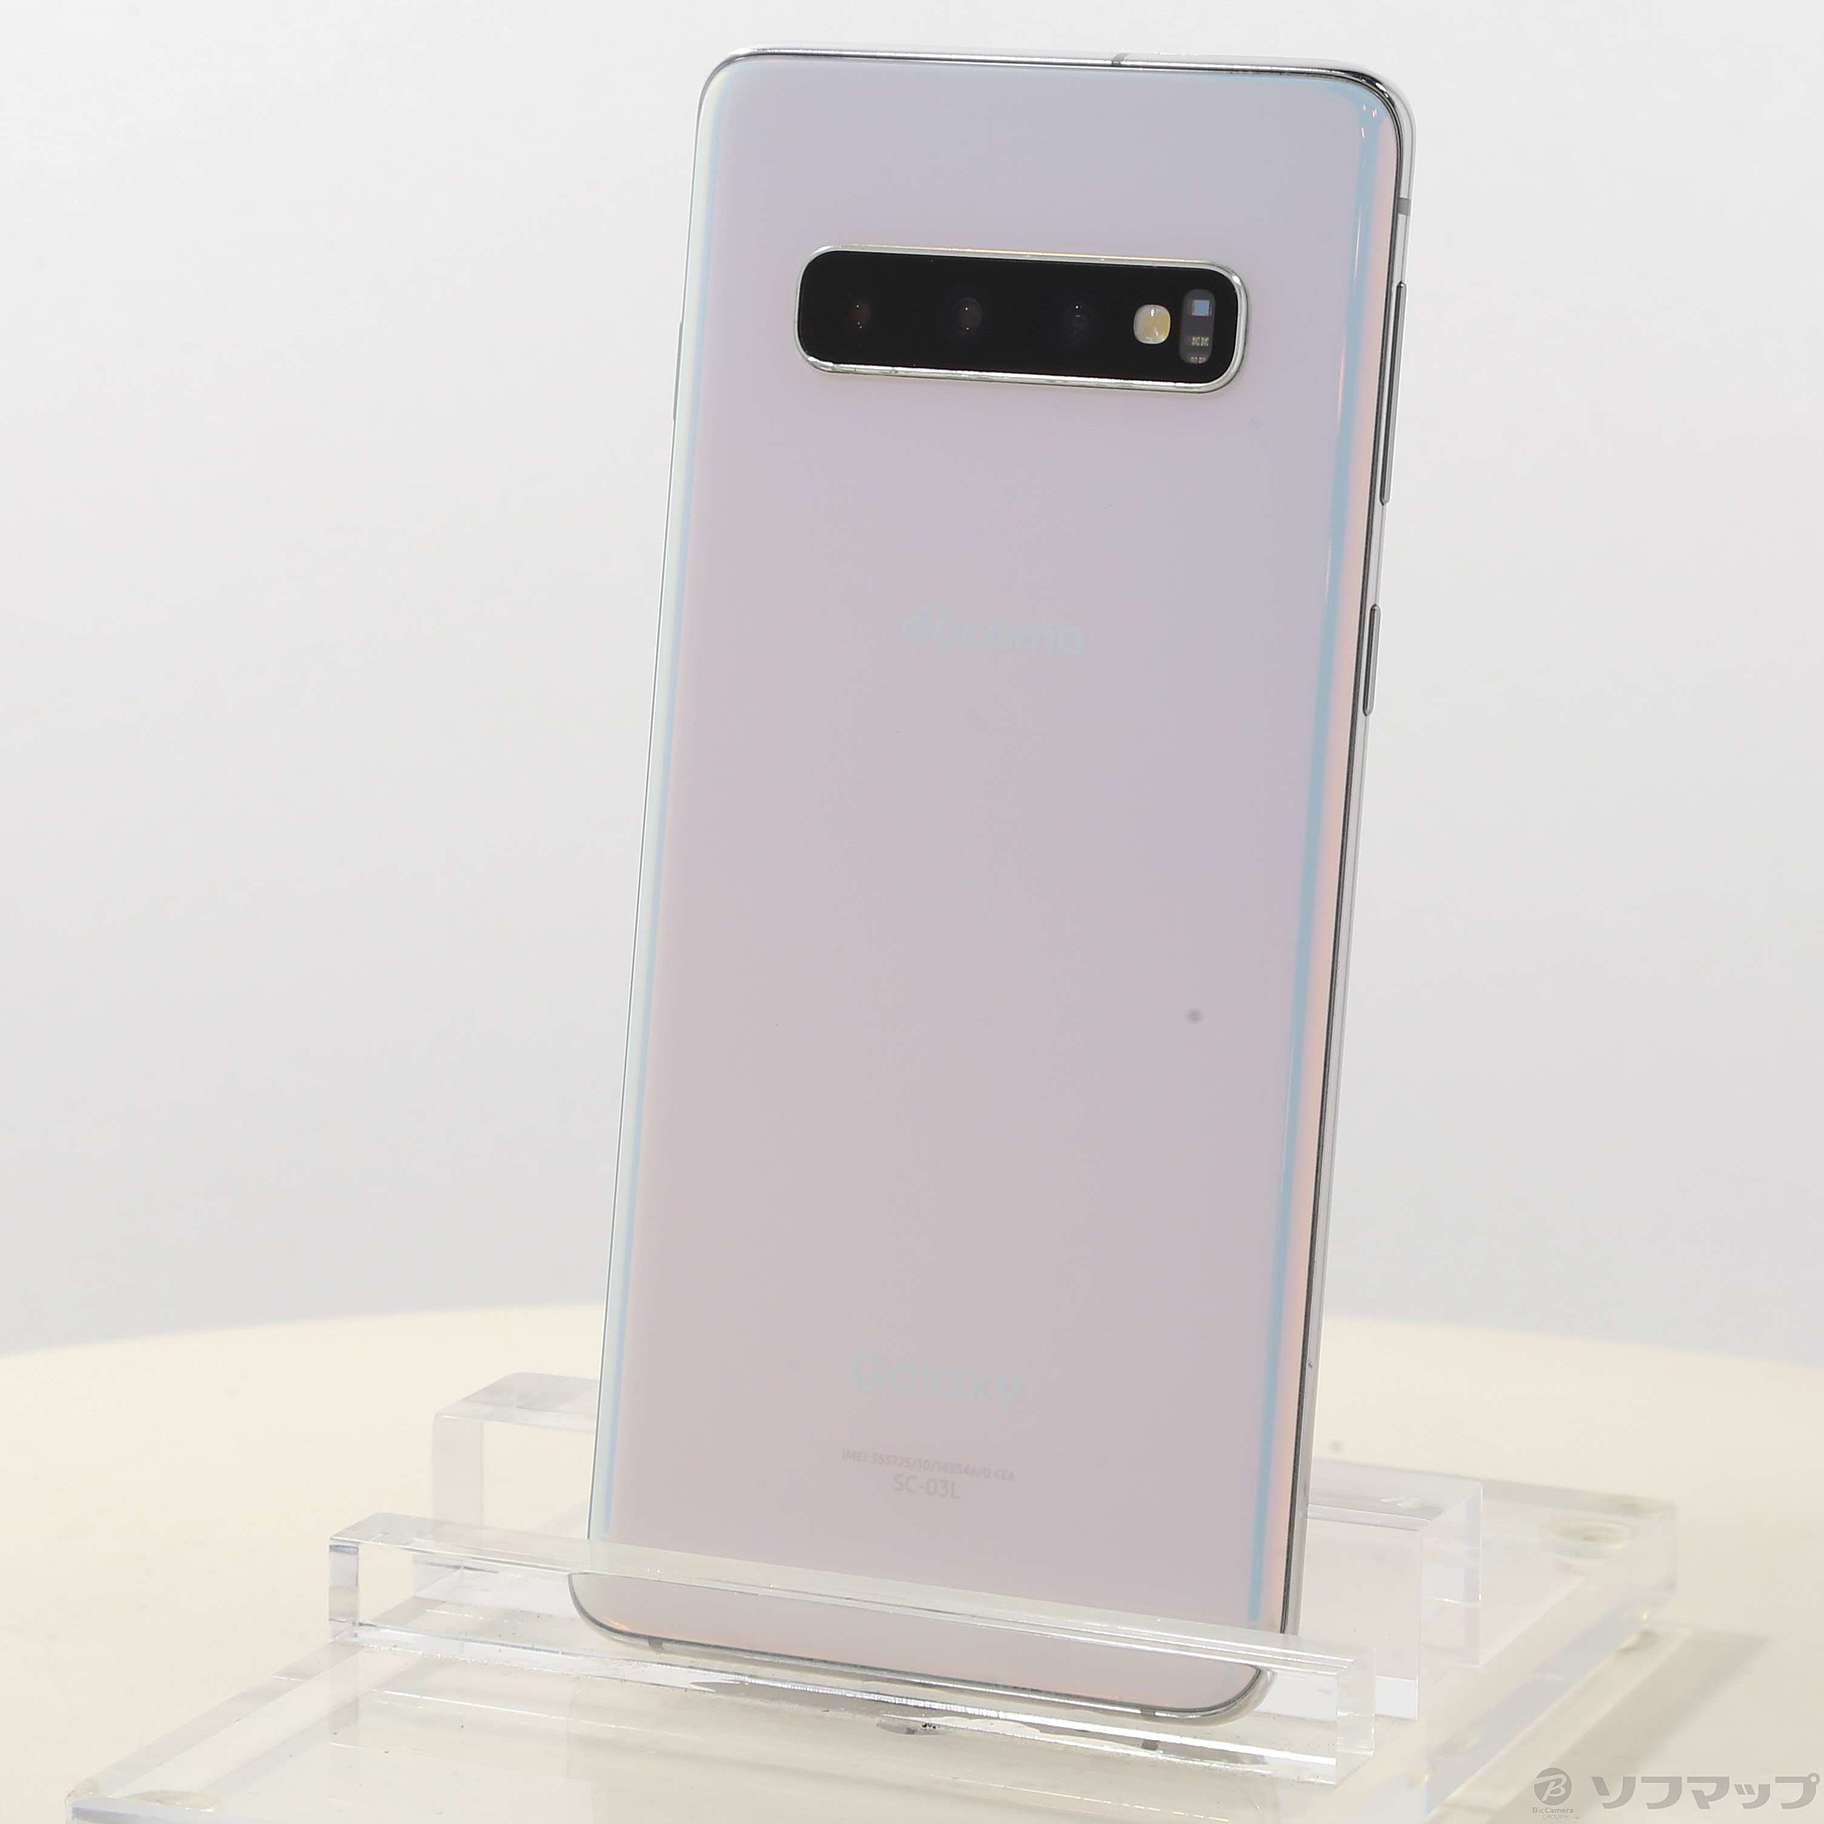 Galaxy S10＋ Prism White 128 GB SIMフリー - スマートフォン本体